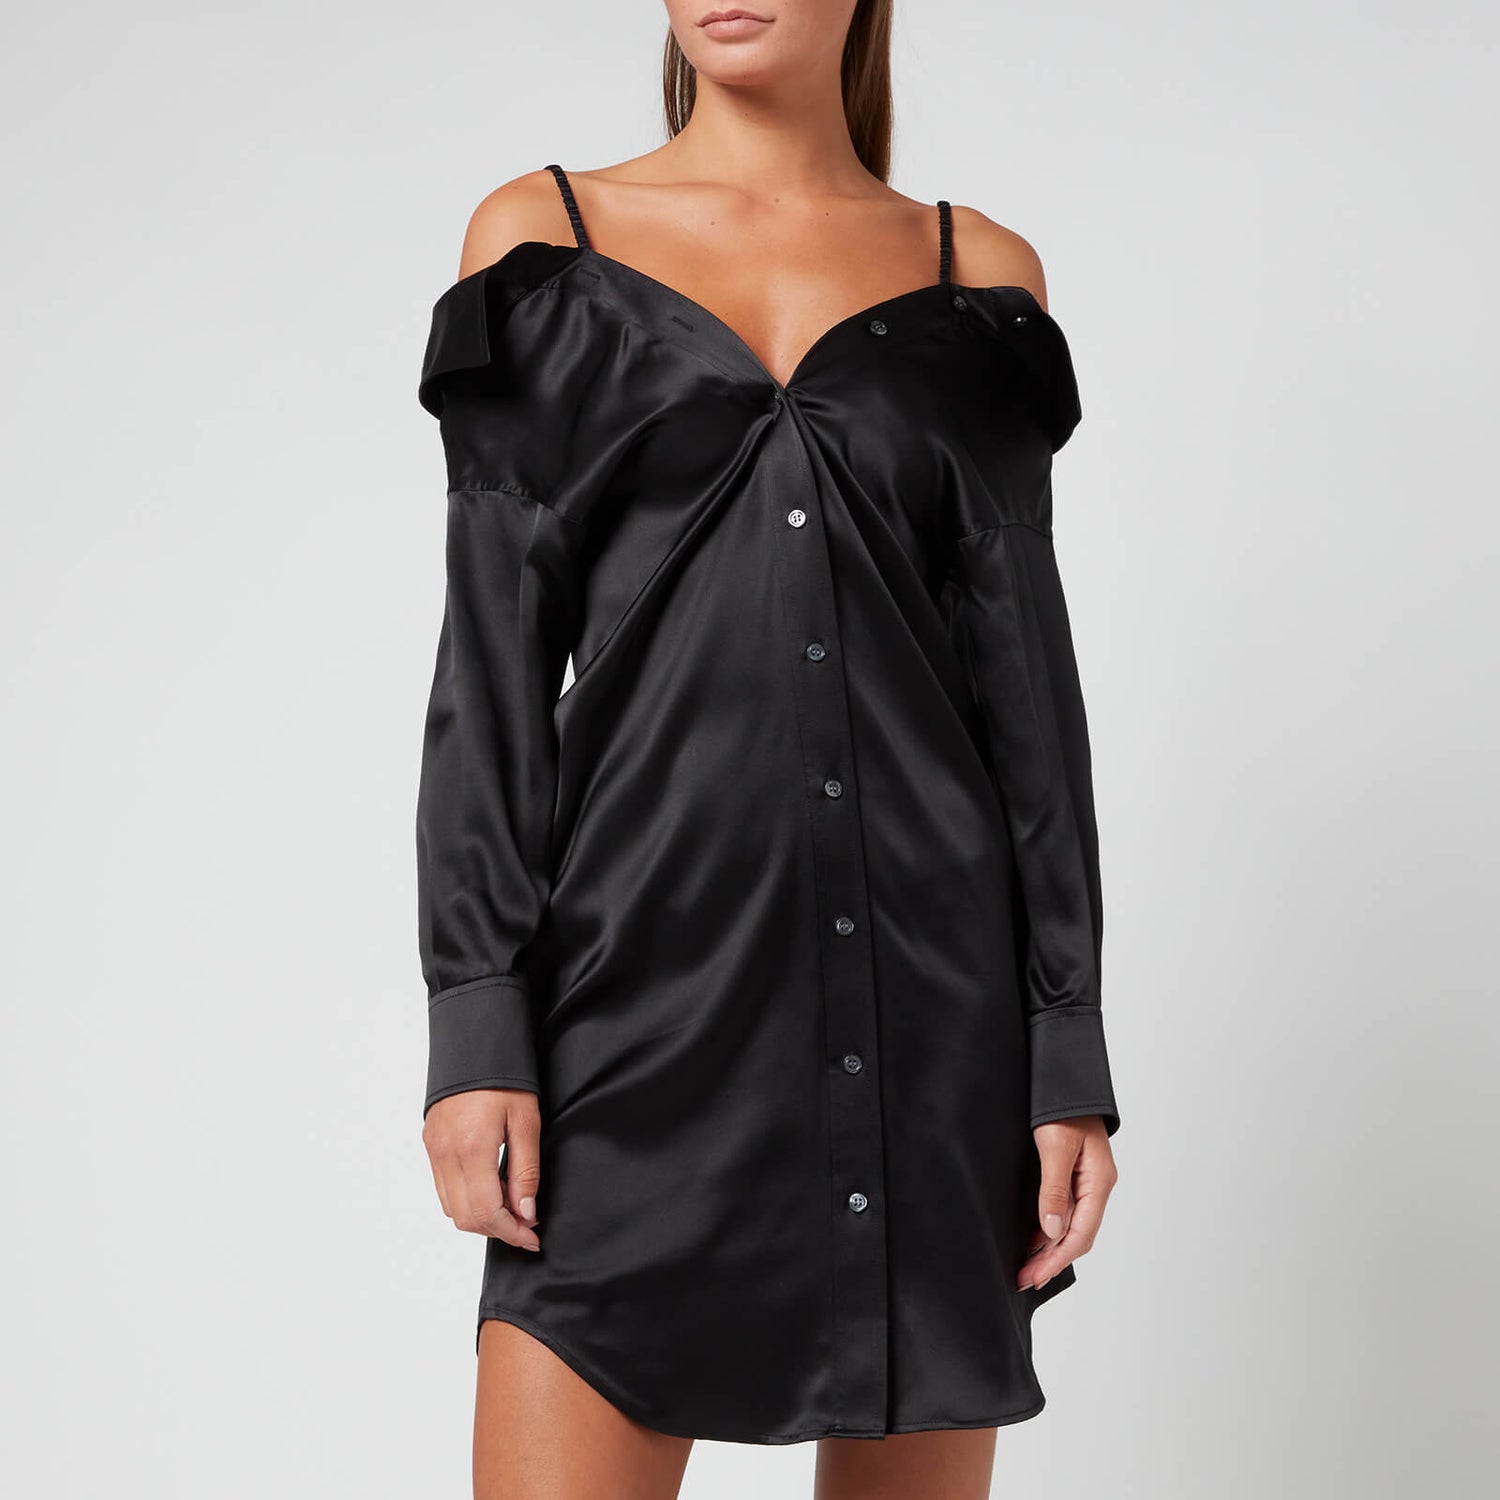 Alexander Wang Women's Off The Shoulder Shirt Dress With Scrunchie Strap - Black - US 10/UK 6